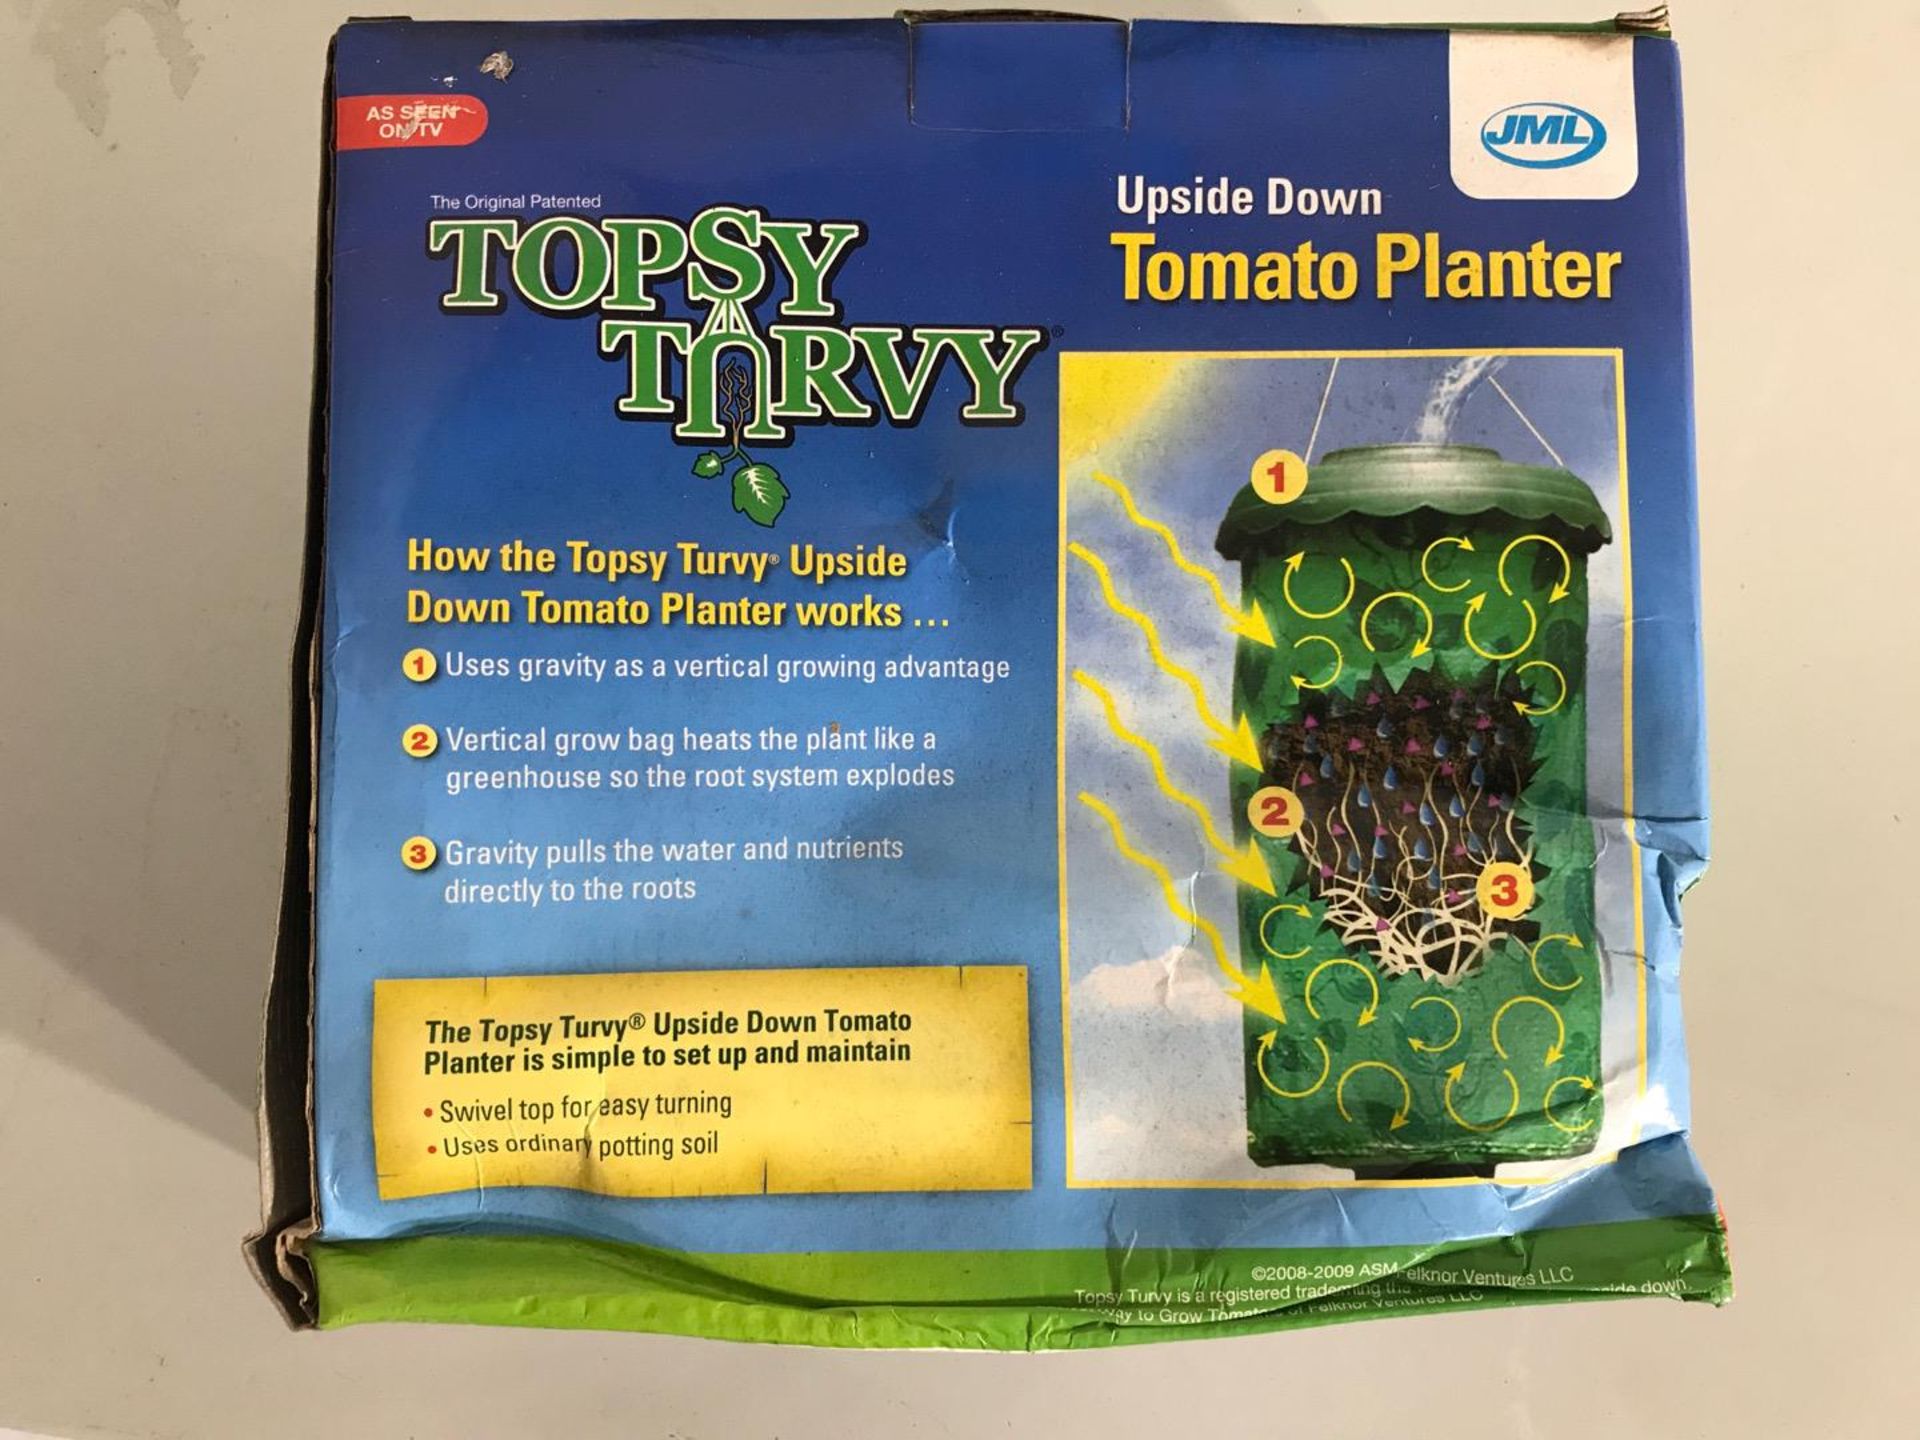 JML topsy turvey upside down tomato planter - Image 2 of 2